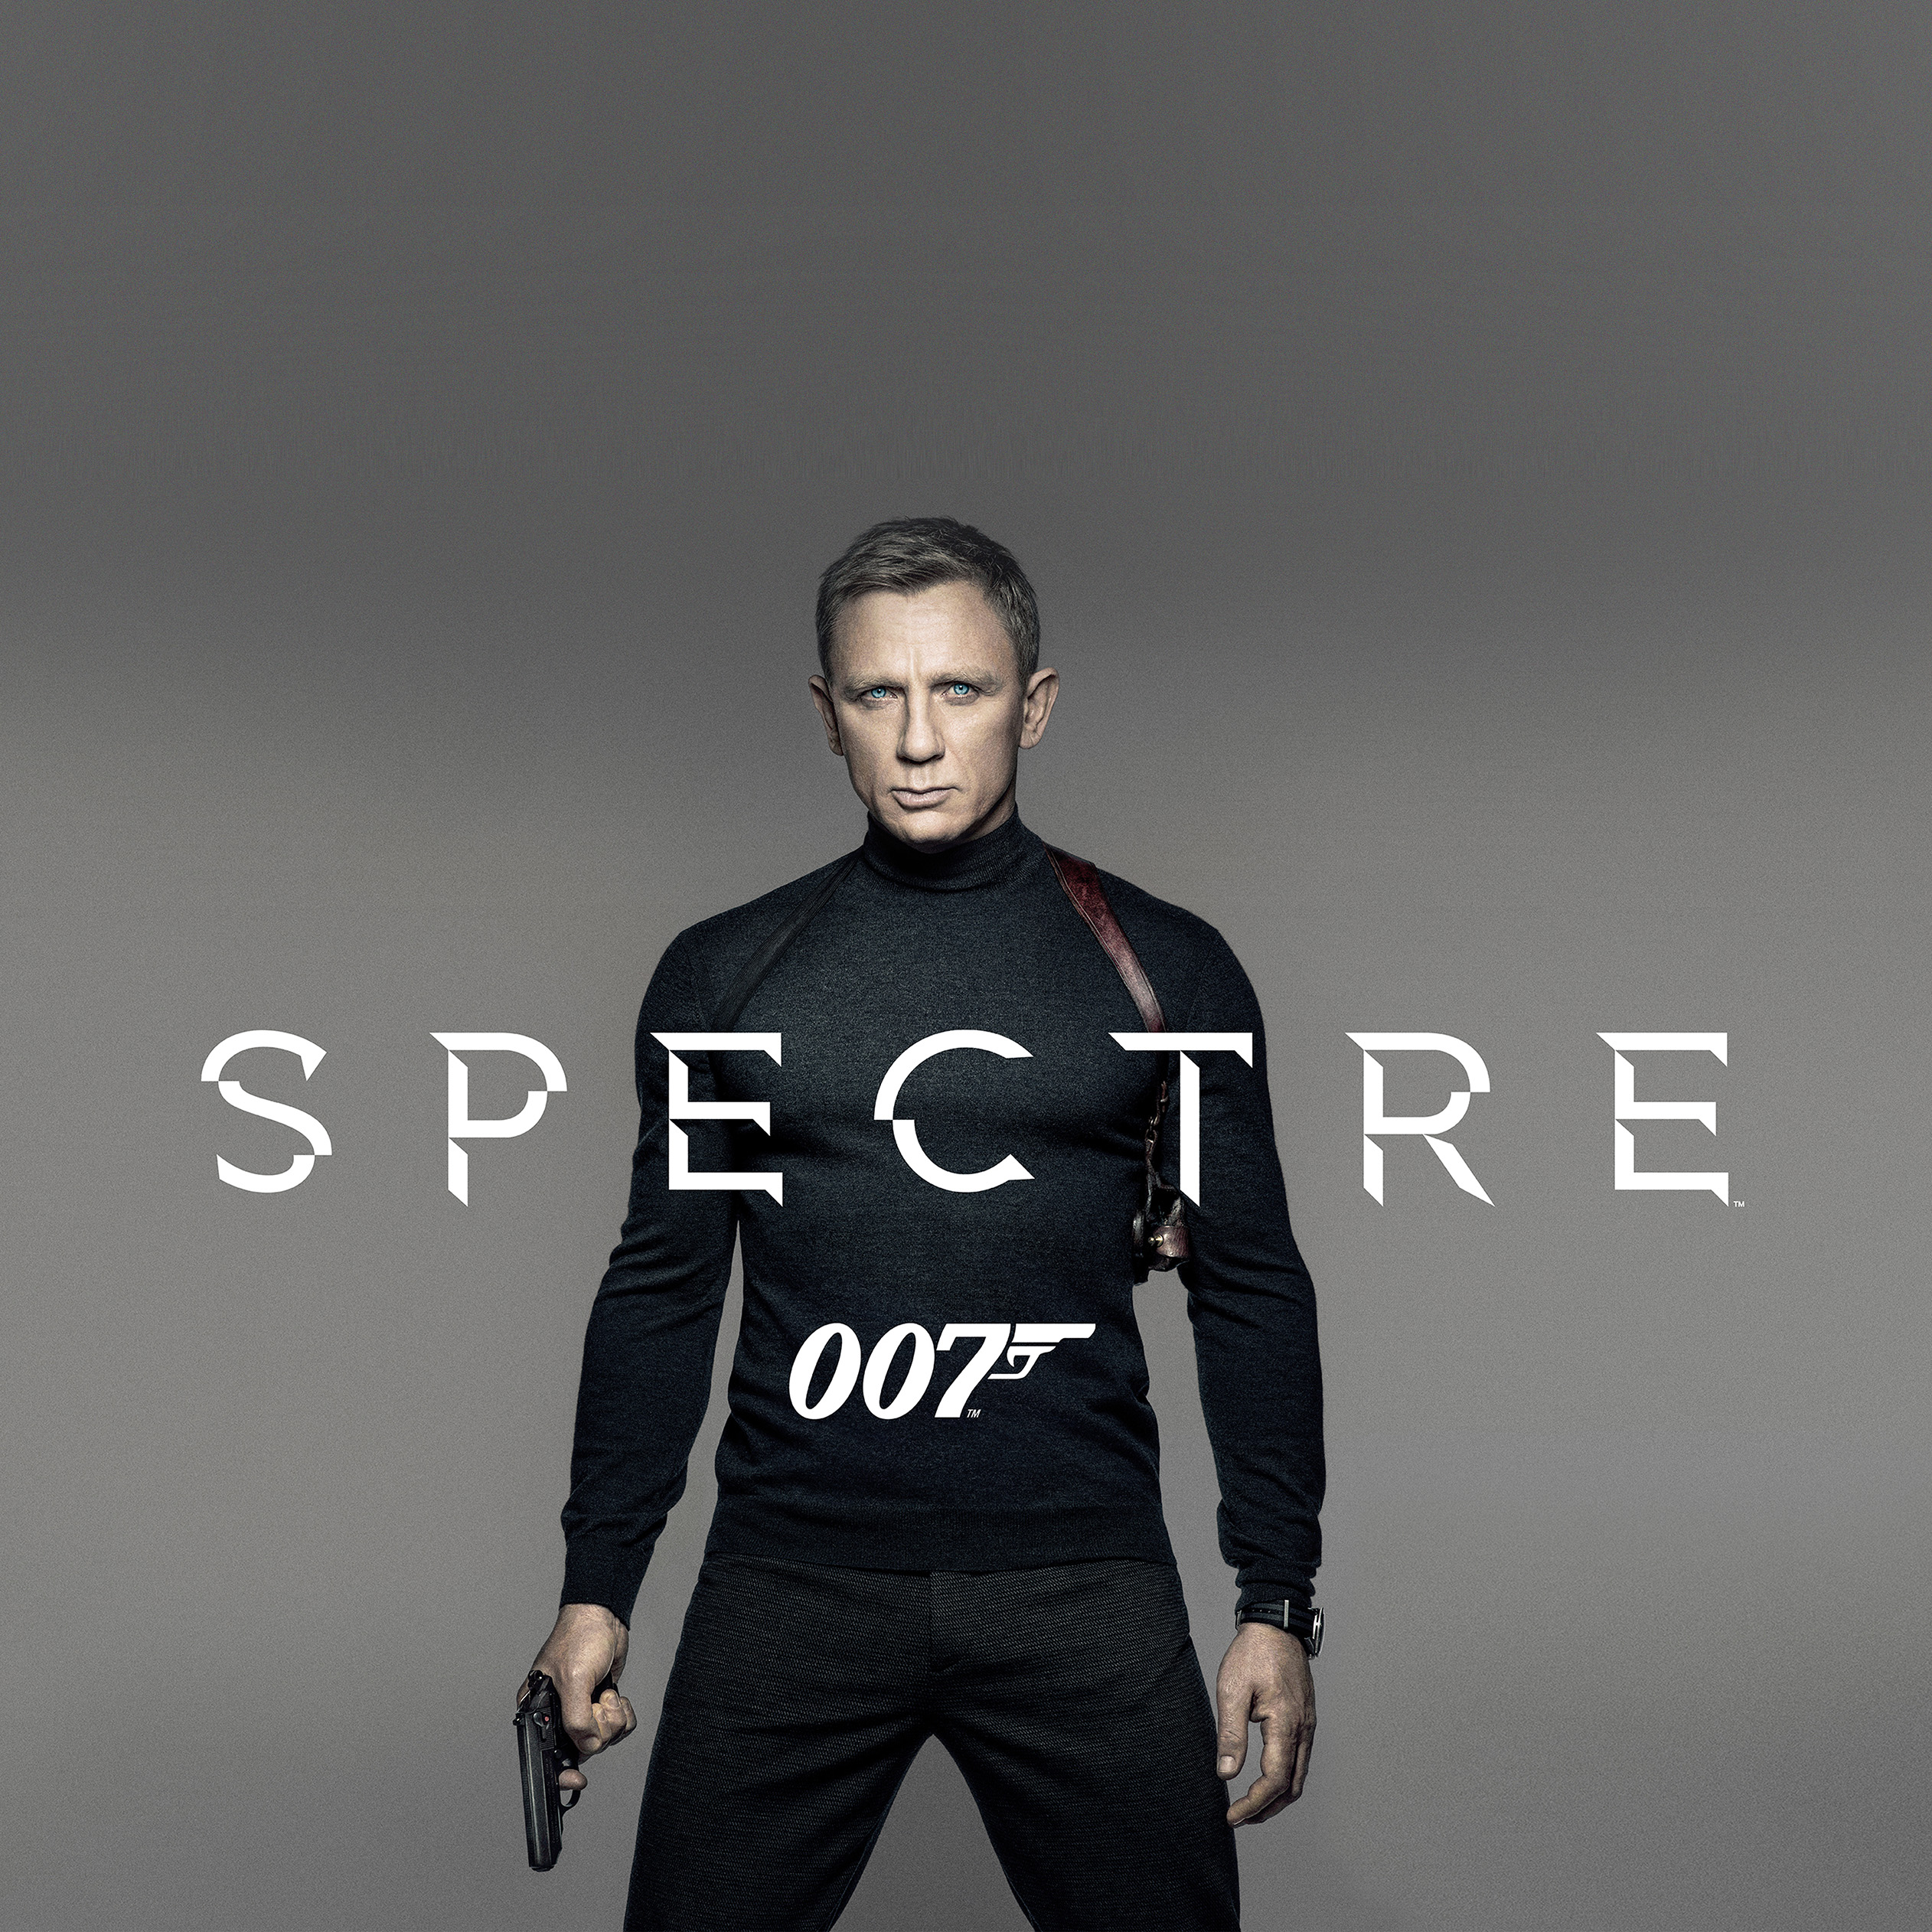 James Bond Spectre Wallpaper My Igadget